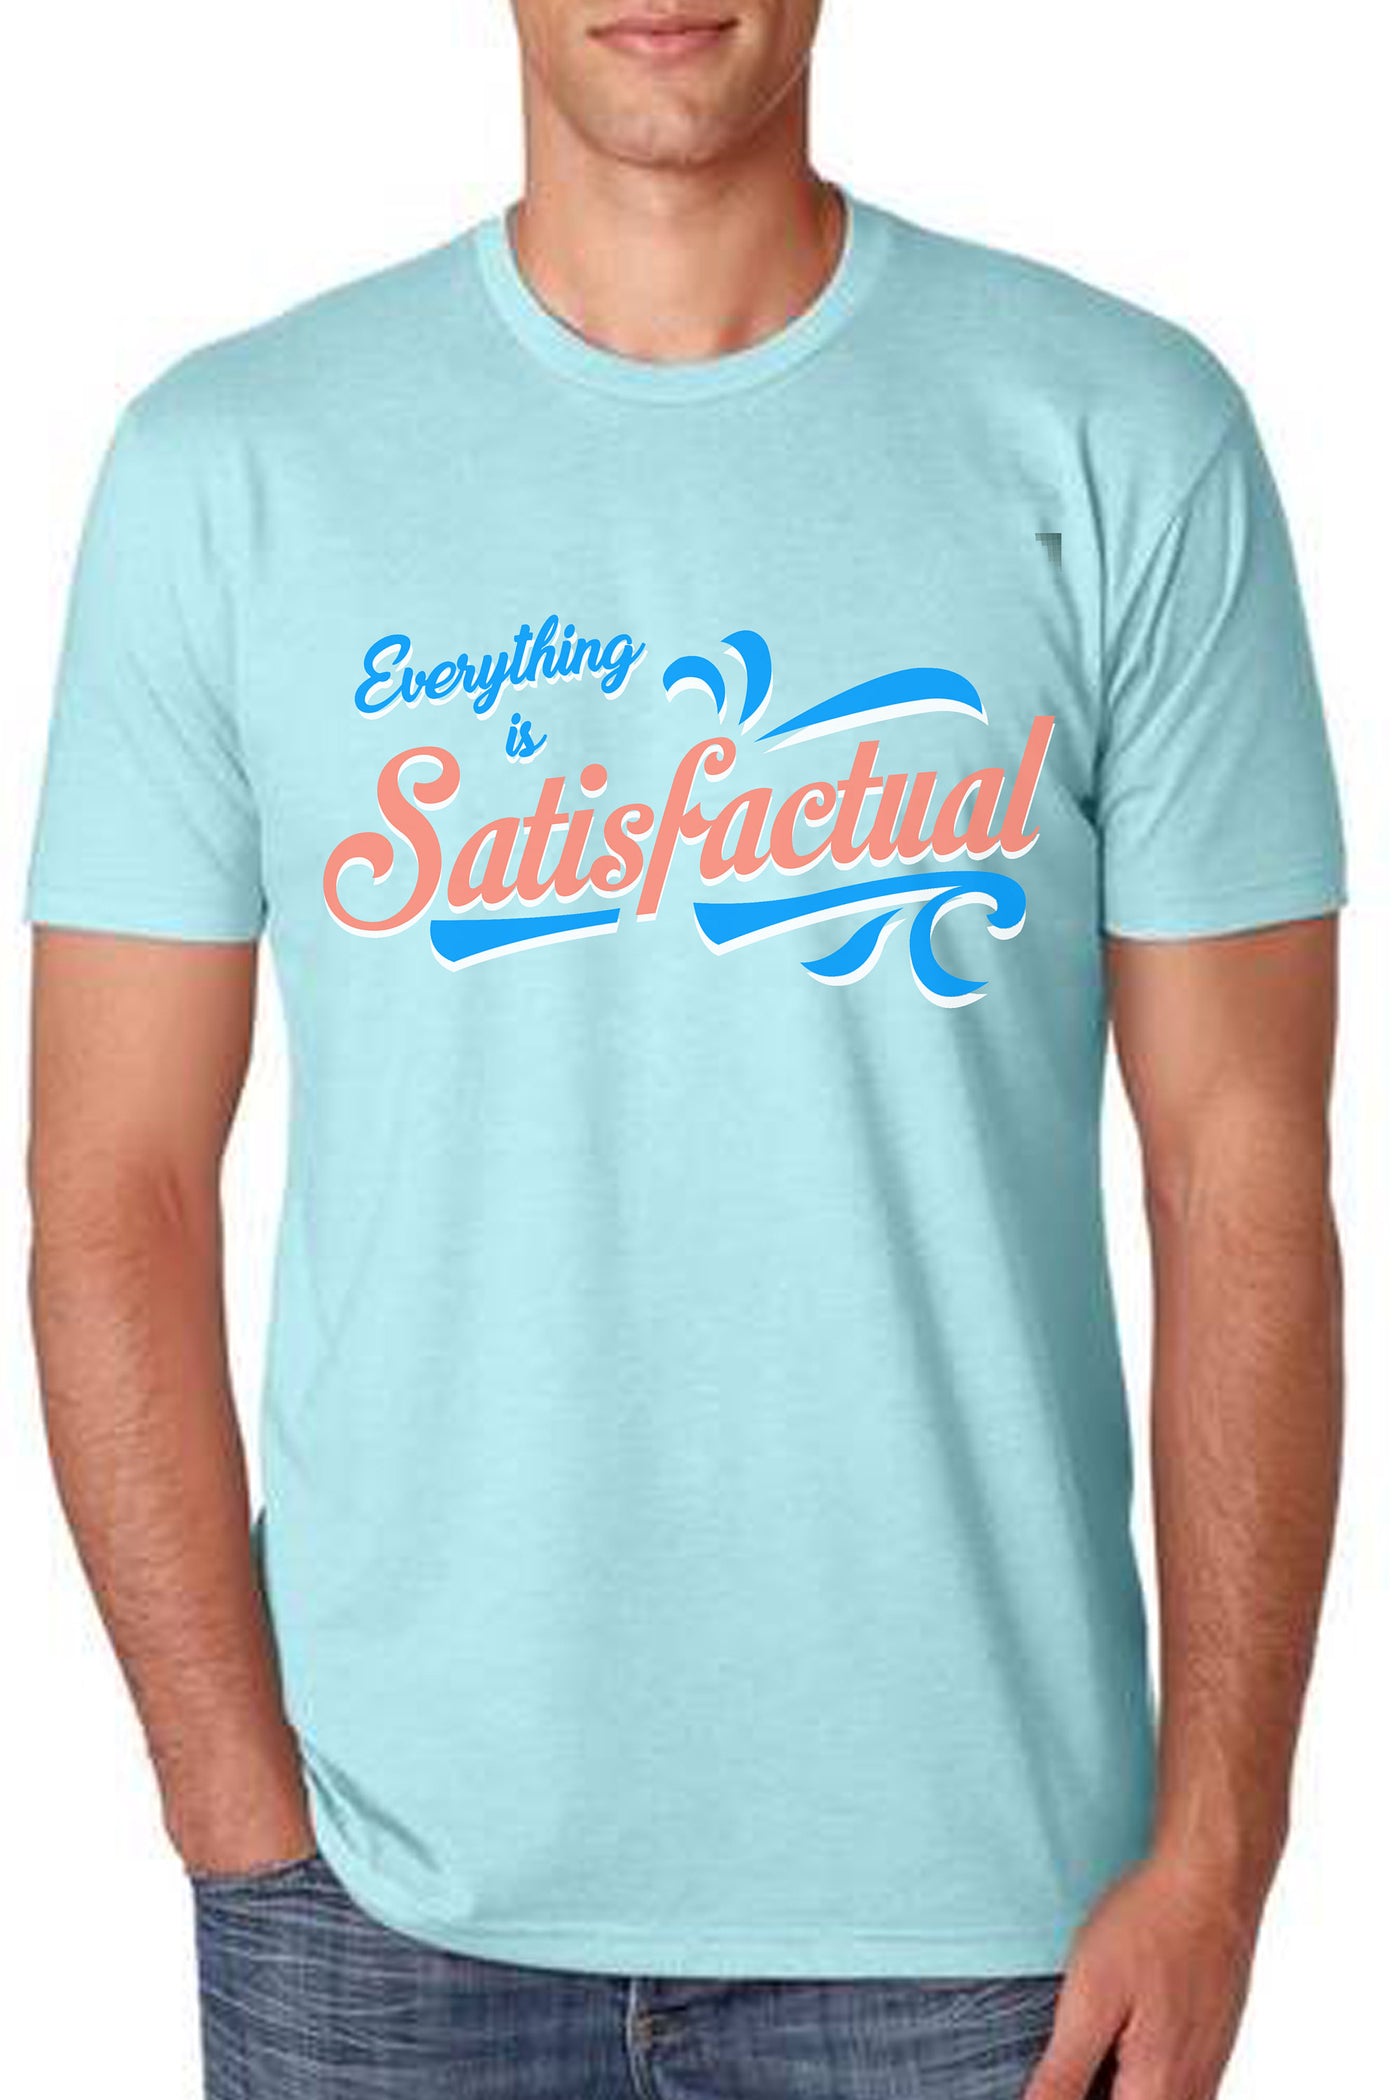 Everything Is Satisfactual Shirt